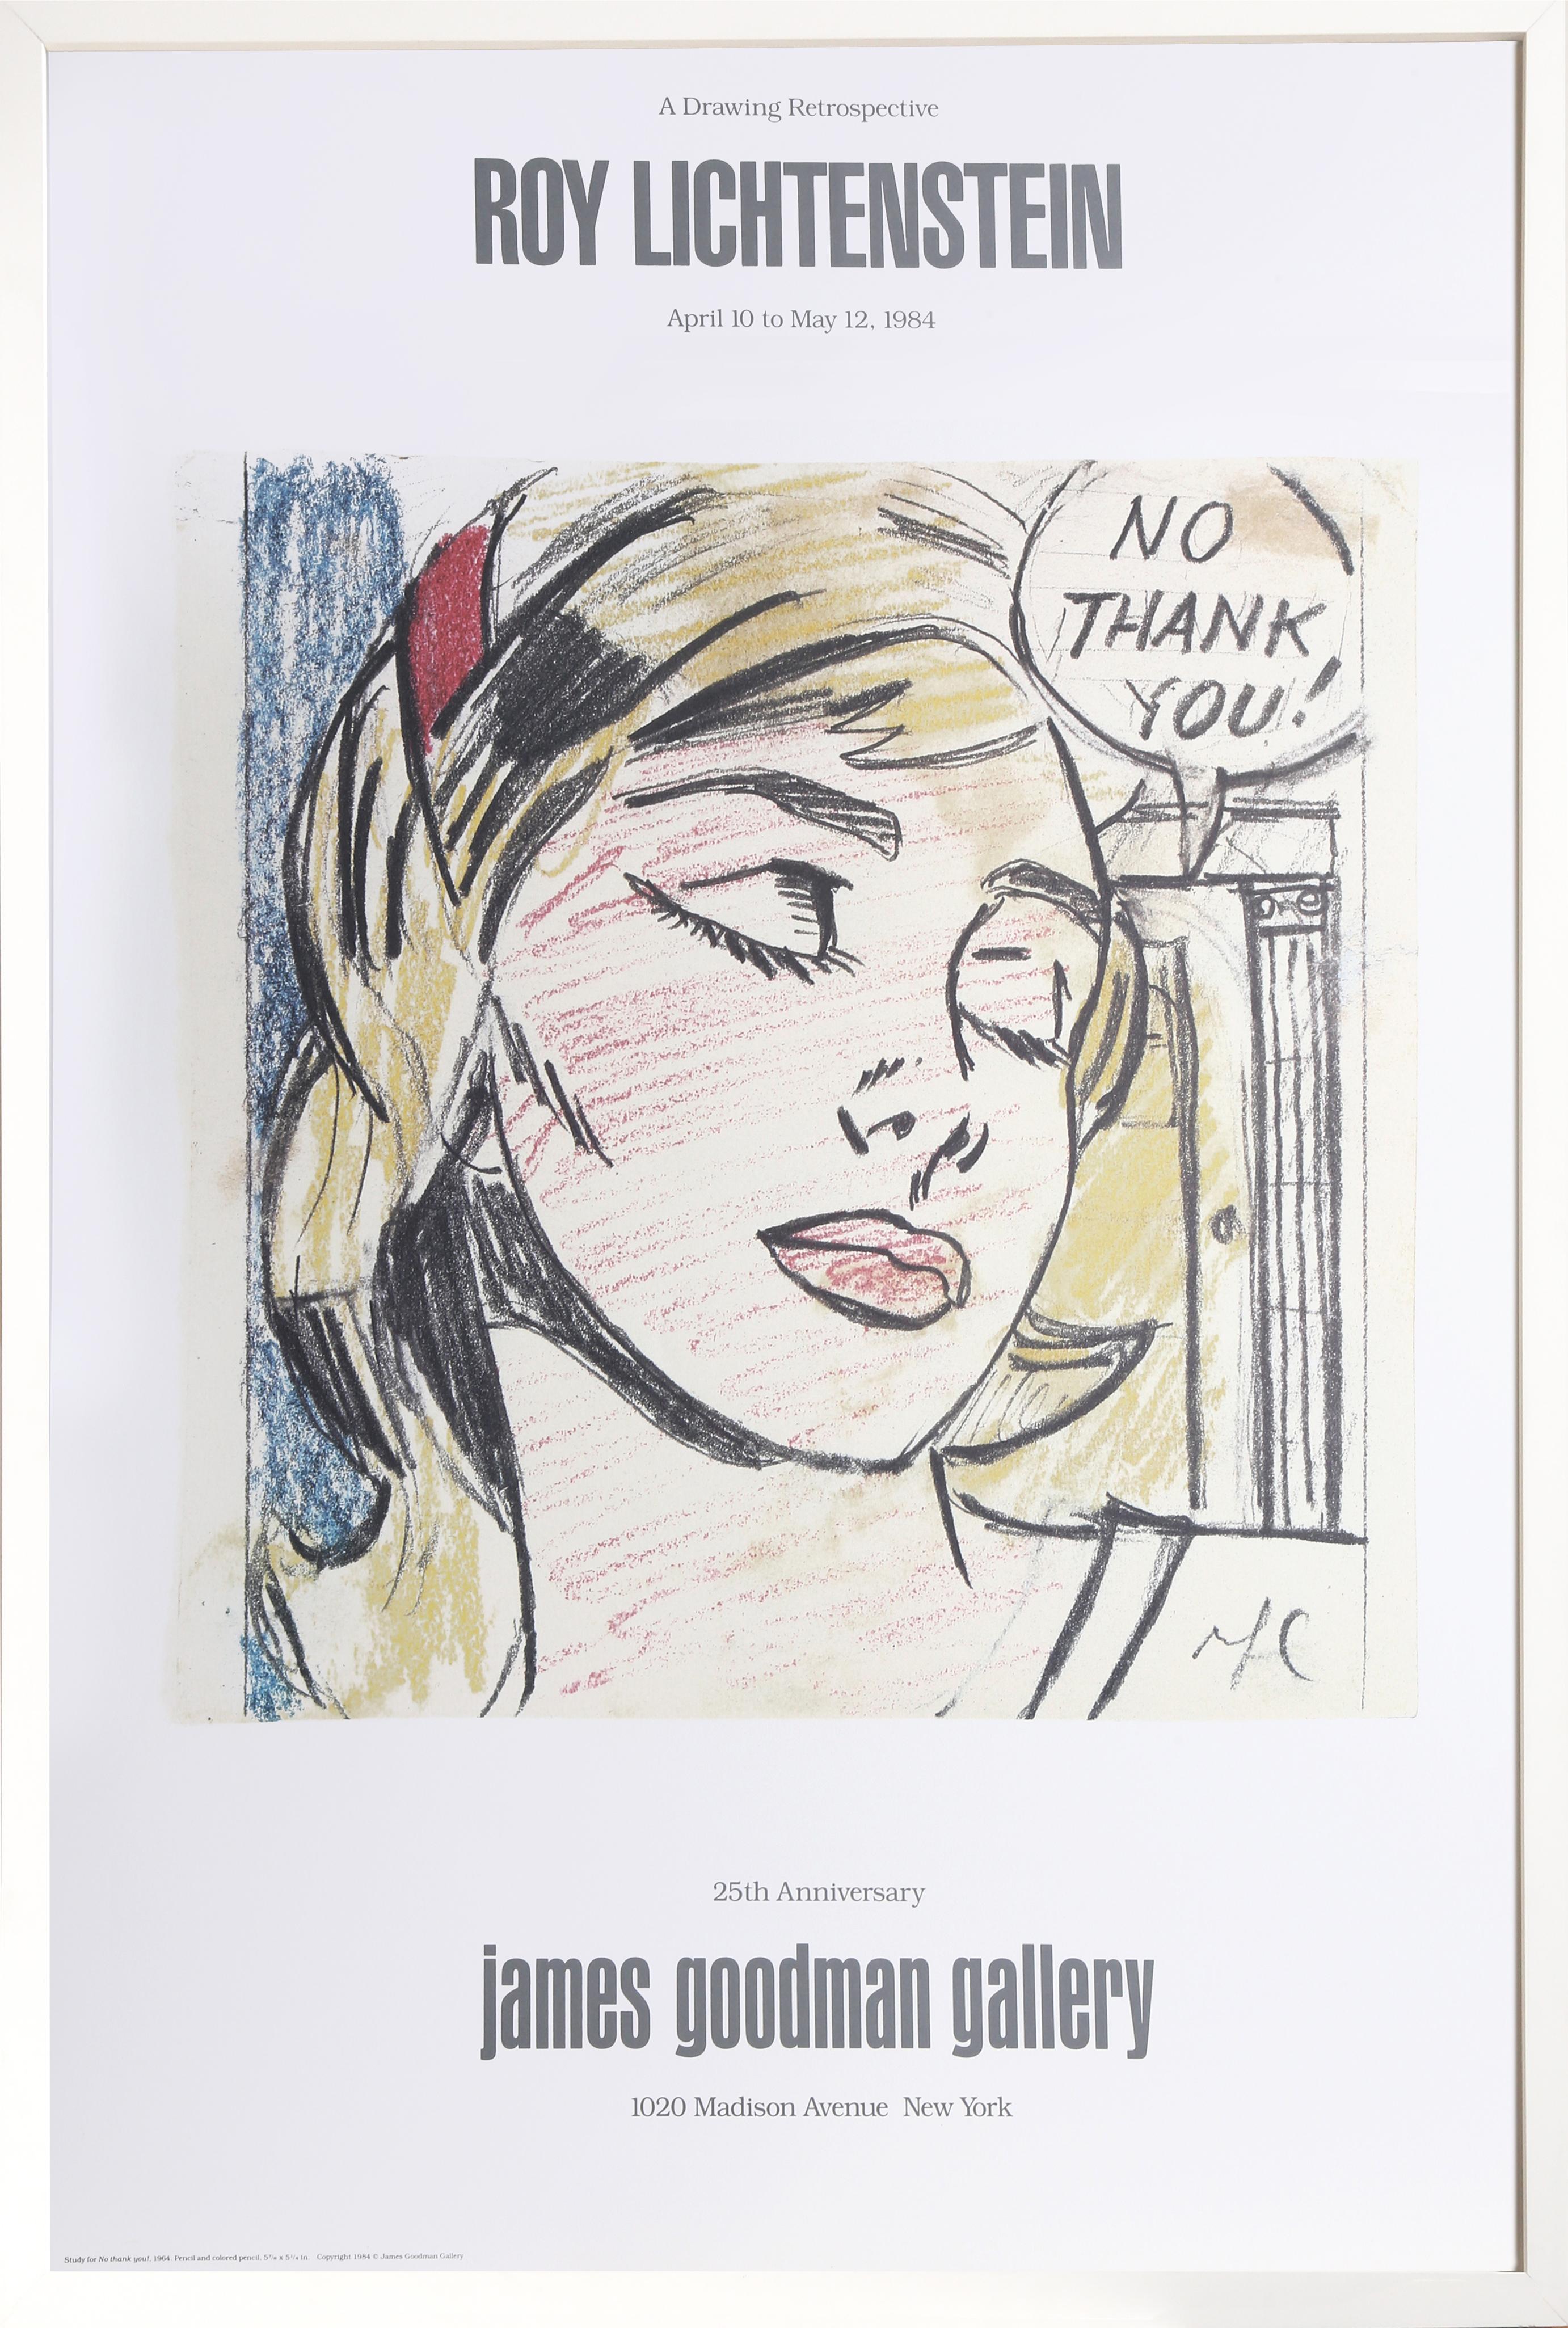 Exhibition poster "Roy Lichtenstein: A Drawing Retrospective" at James Goodman